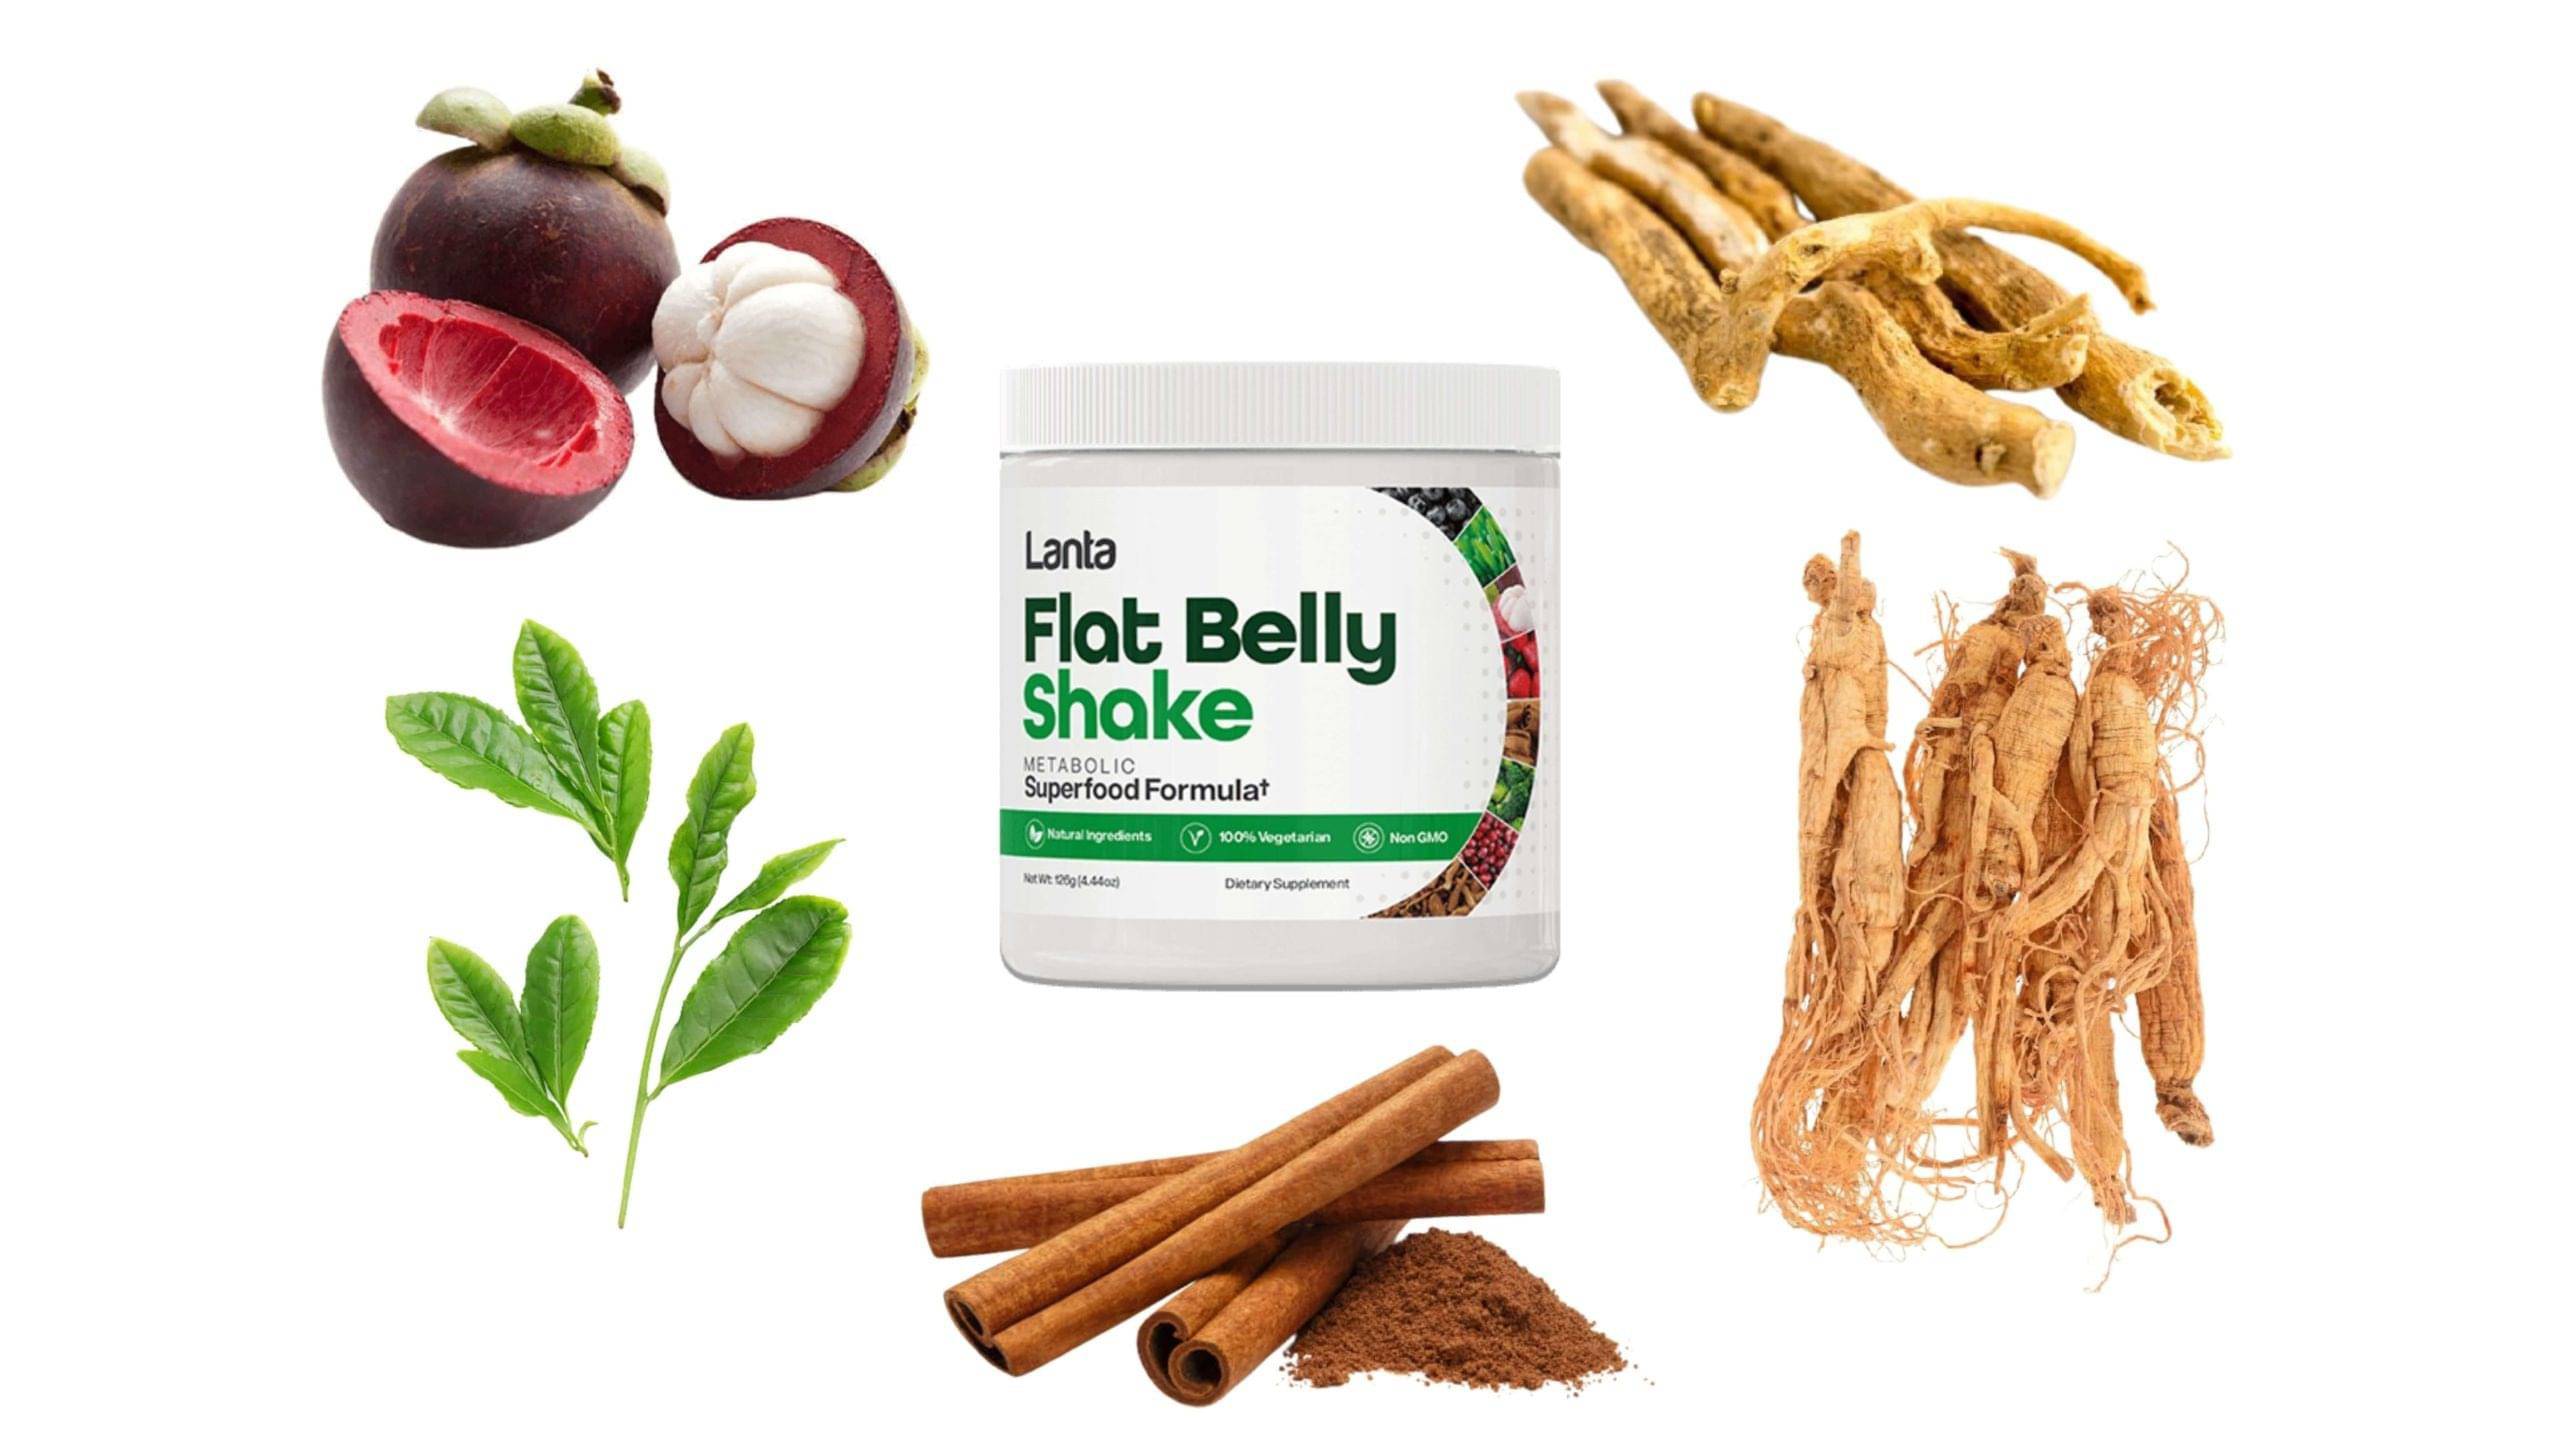 Lanta Flat Belly Shake dietary supplement